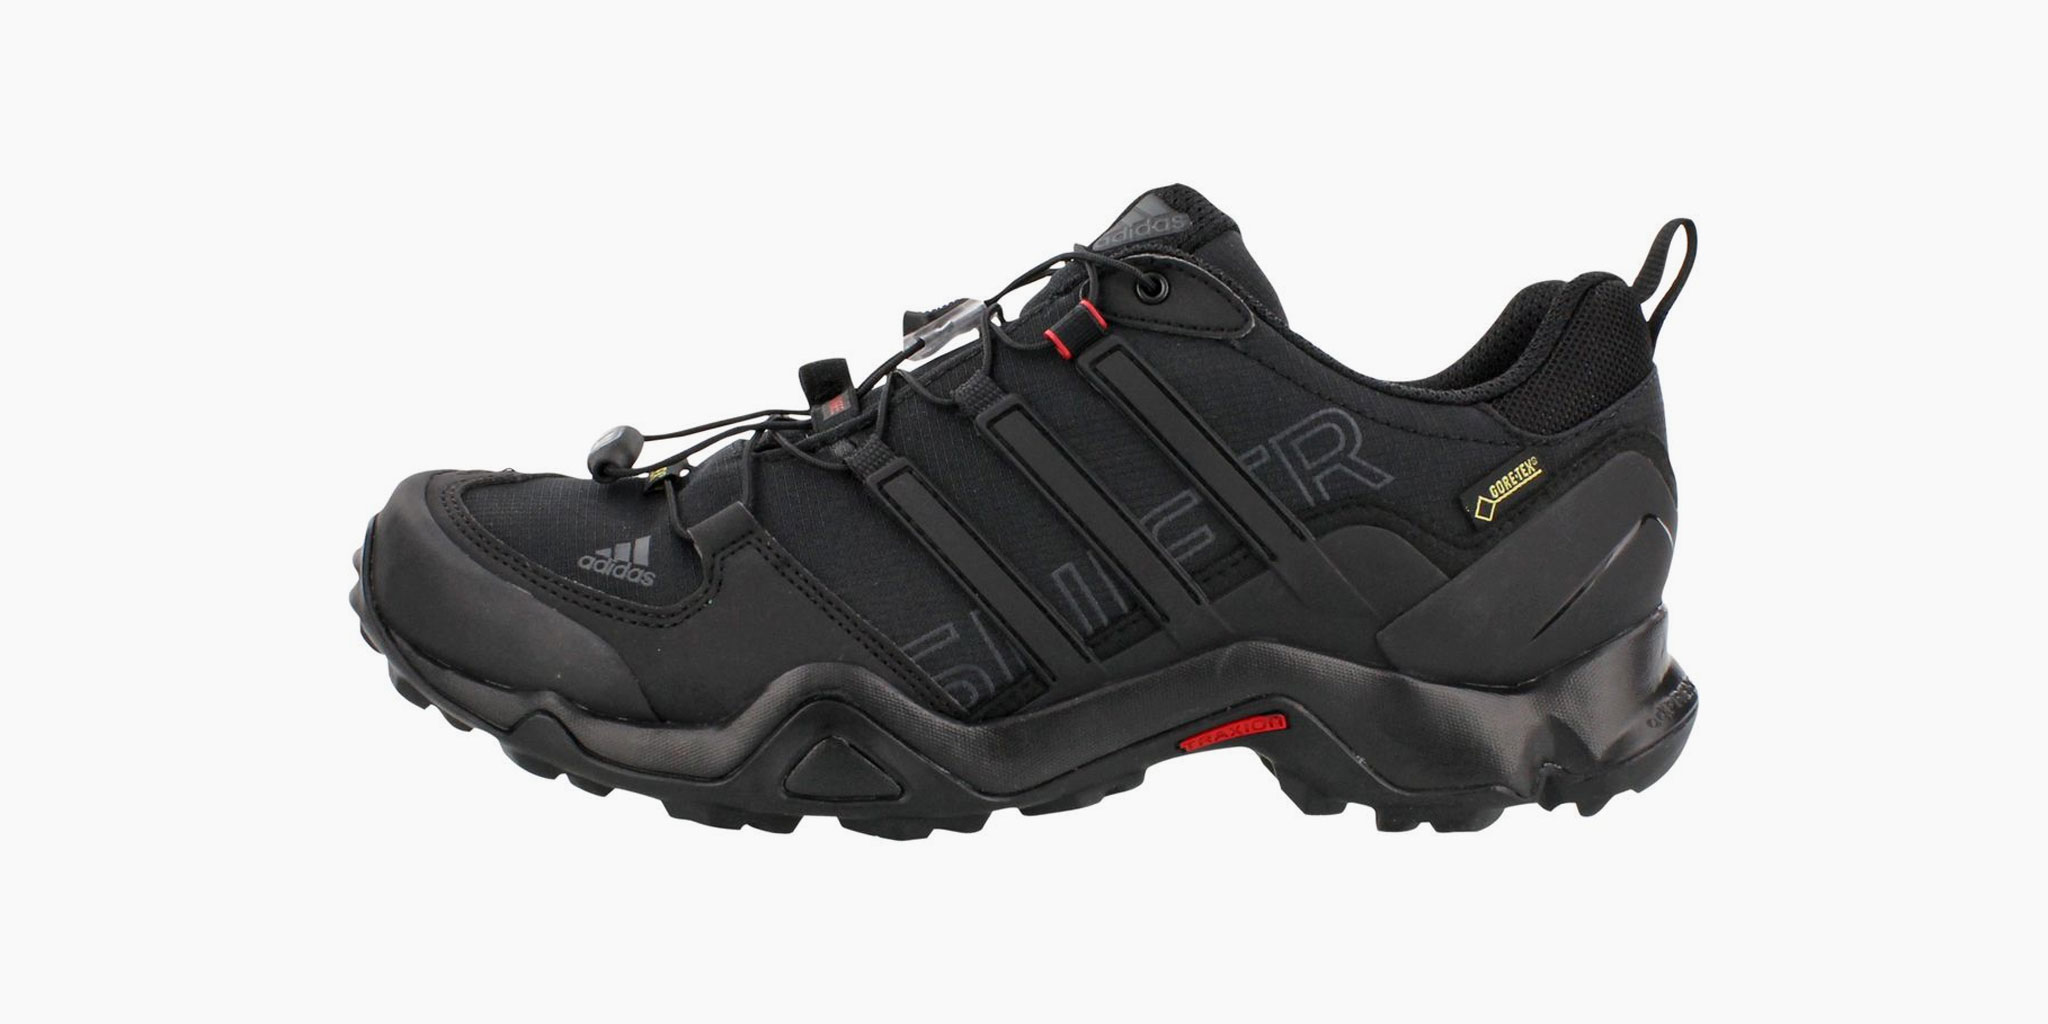 Adidas Men's Terrex Swift R GTX Hiking Shoes